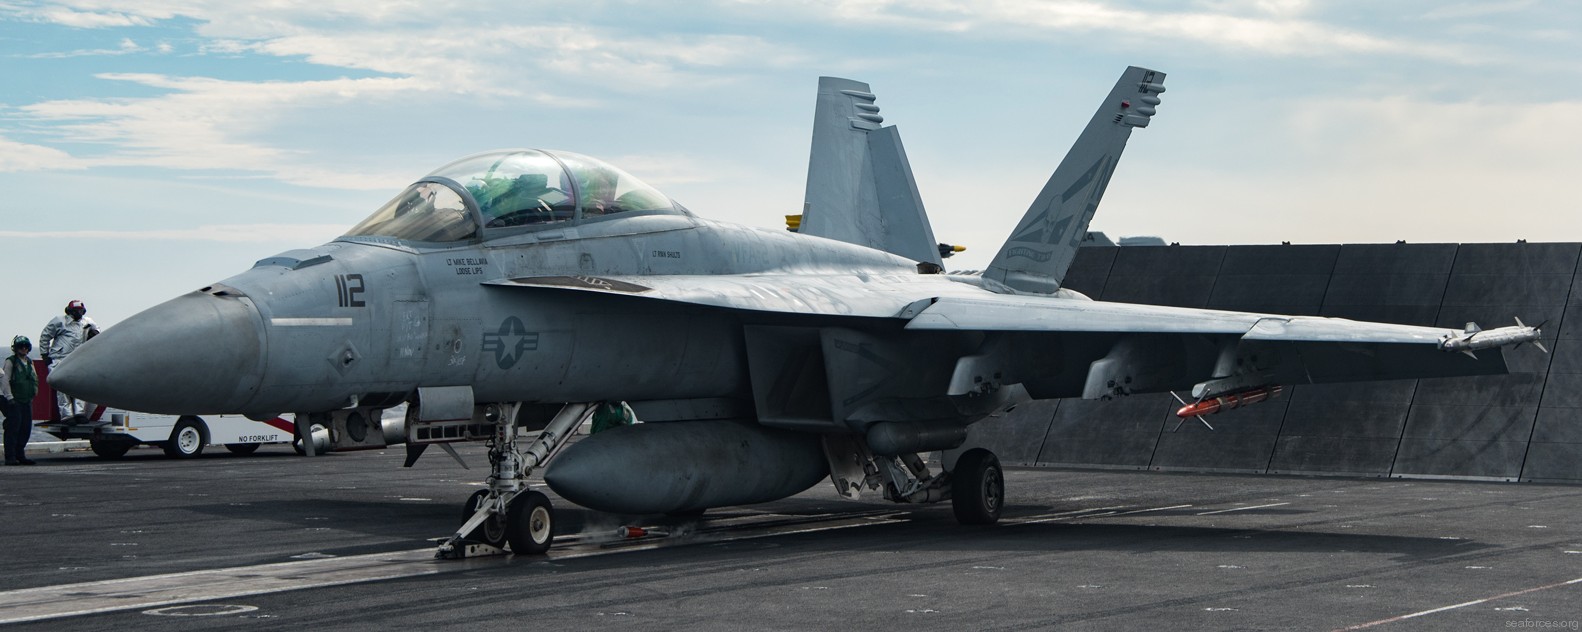 vfa-2 bounty hunters strike fighter squadron us navy f/a-18f super hornet carrier air wing cvw-2 uss carl vinson cvn-70 10